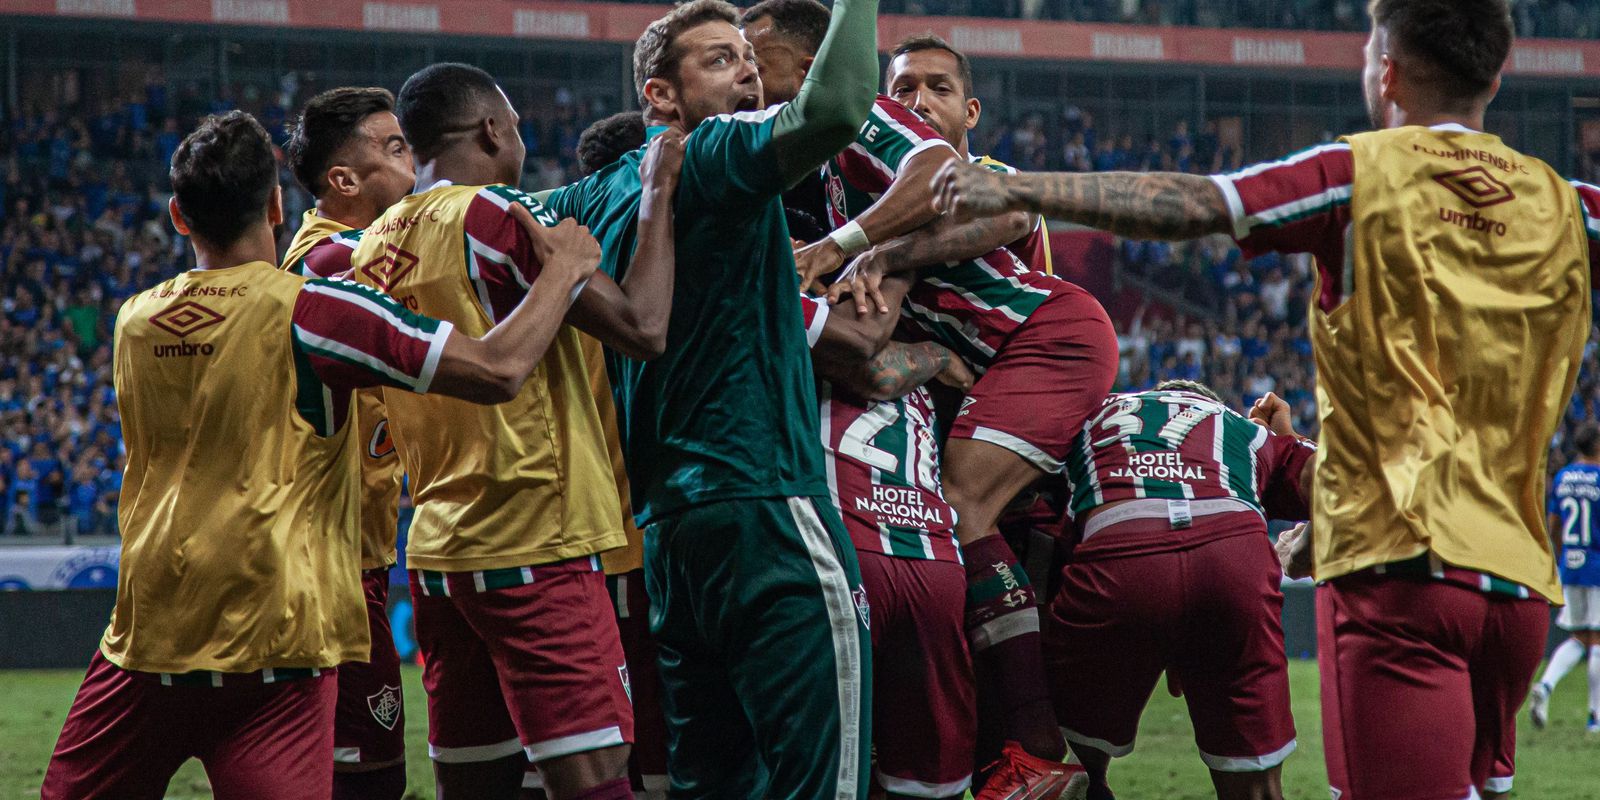 Copa do Brasil: Fluminense beats Cruzeiro at Mineirão to advance